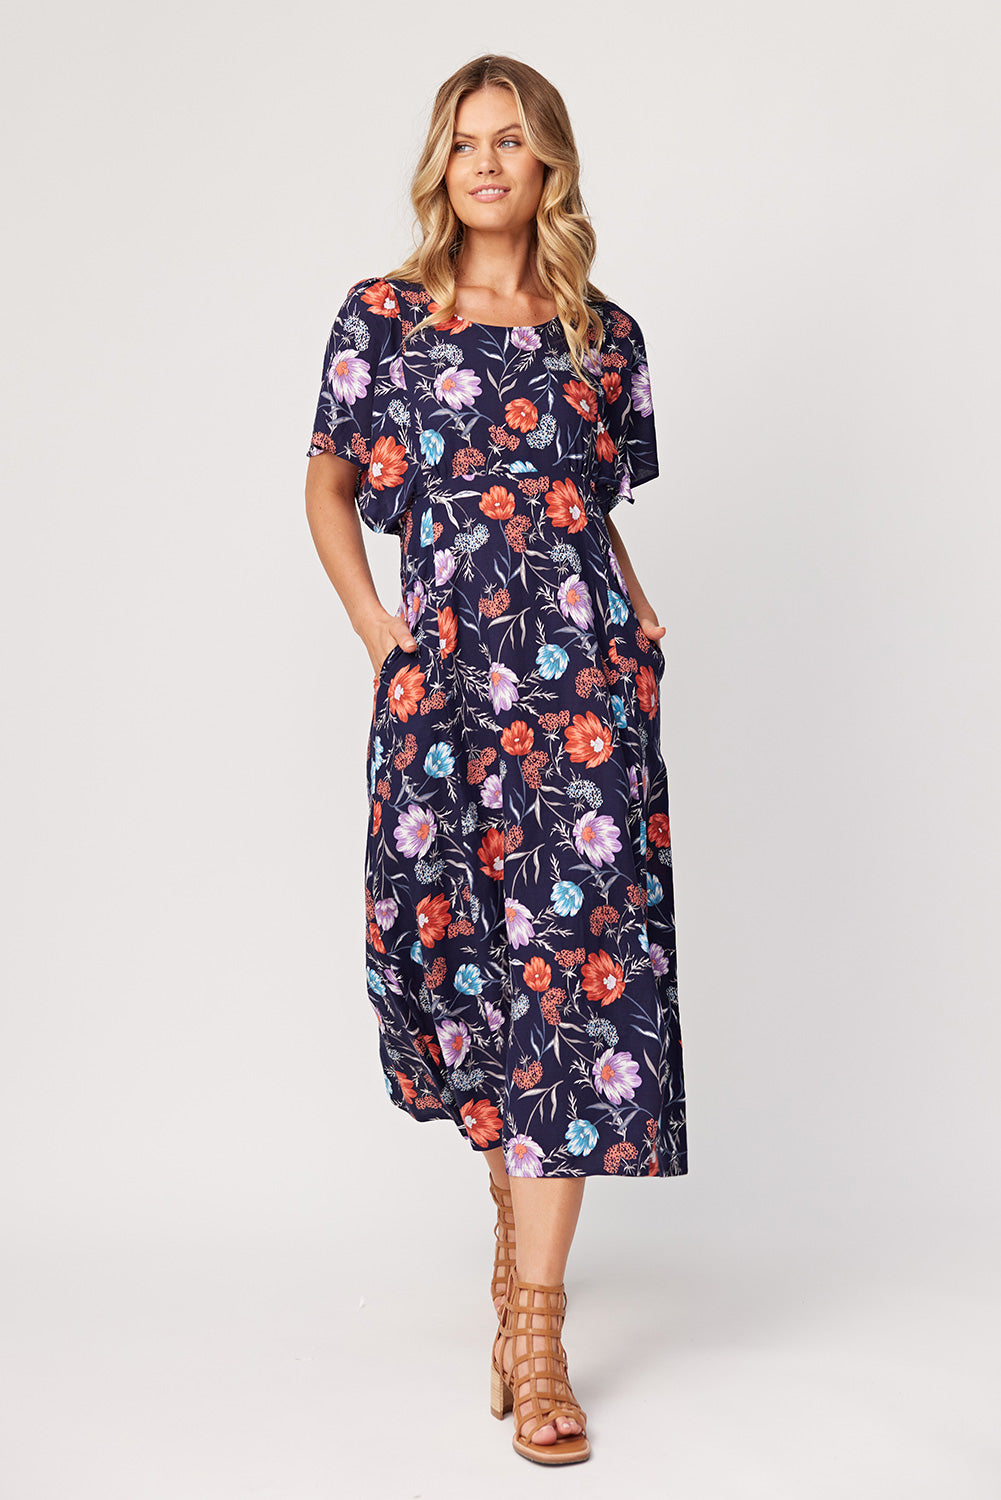 Lemon Tree - Mavis Dress - LT740 - Navy Floral - 50% Off 1x size 20 left